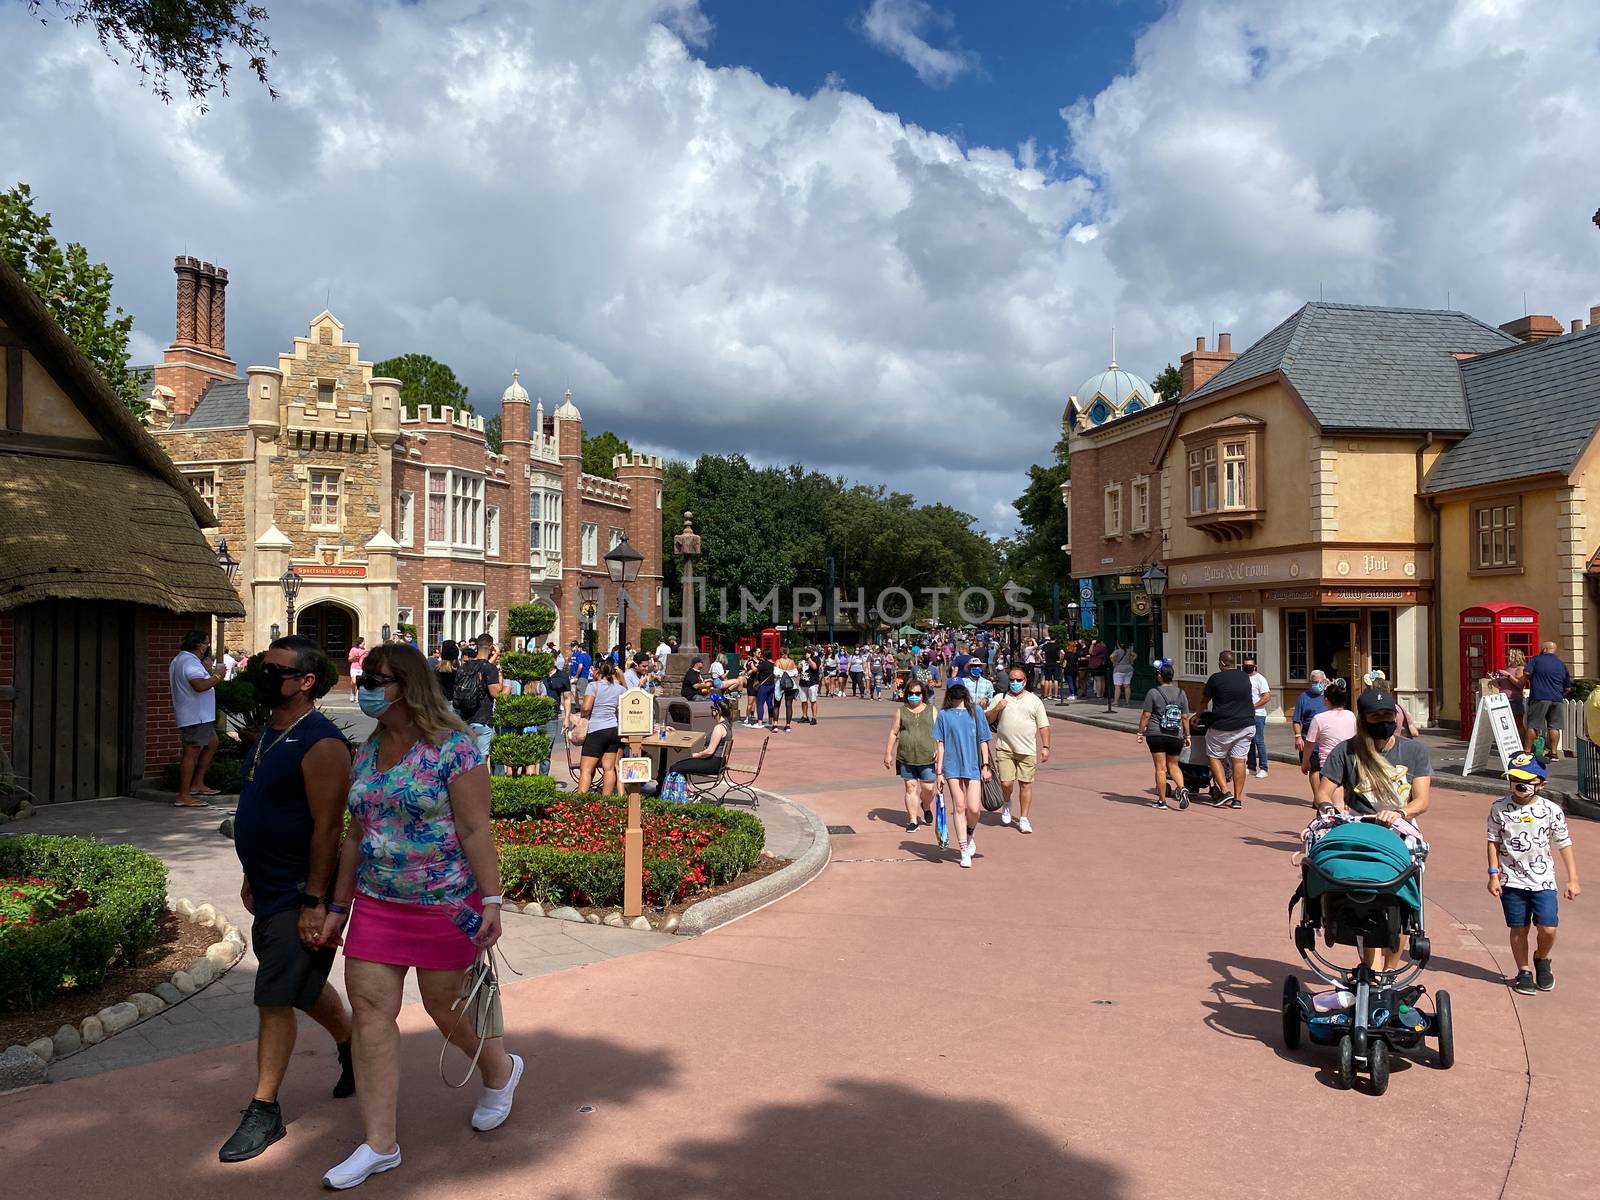 orlando,FL/USA-10/24/20: People walking around the England area of the World Showcase in EPCOT at Disney World in Orlando, Florida.